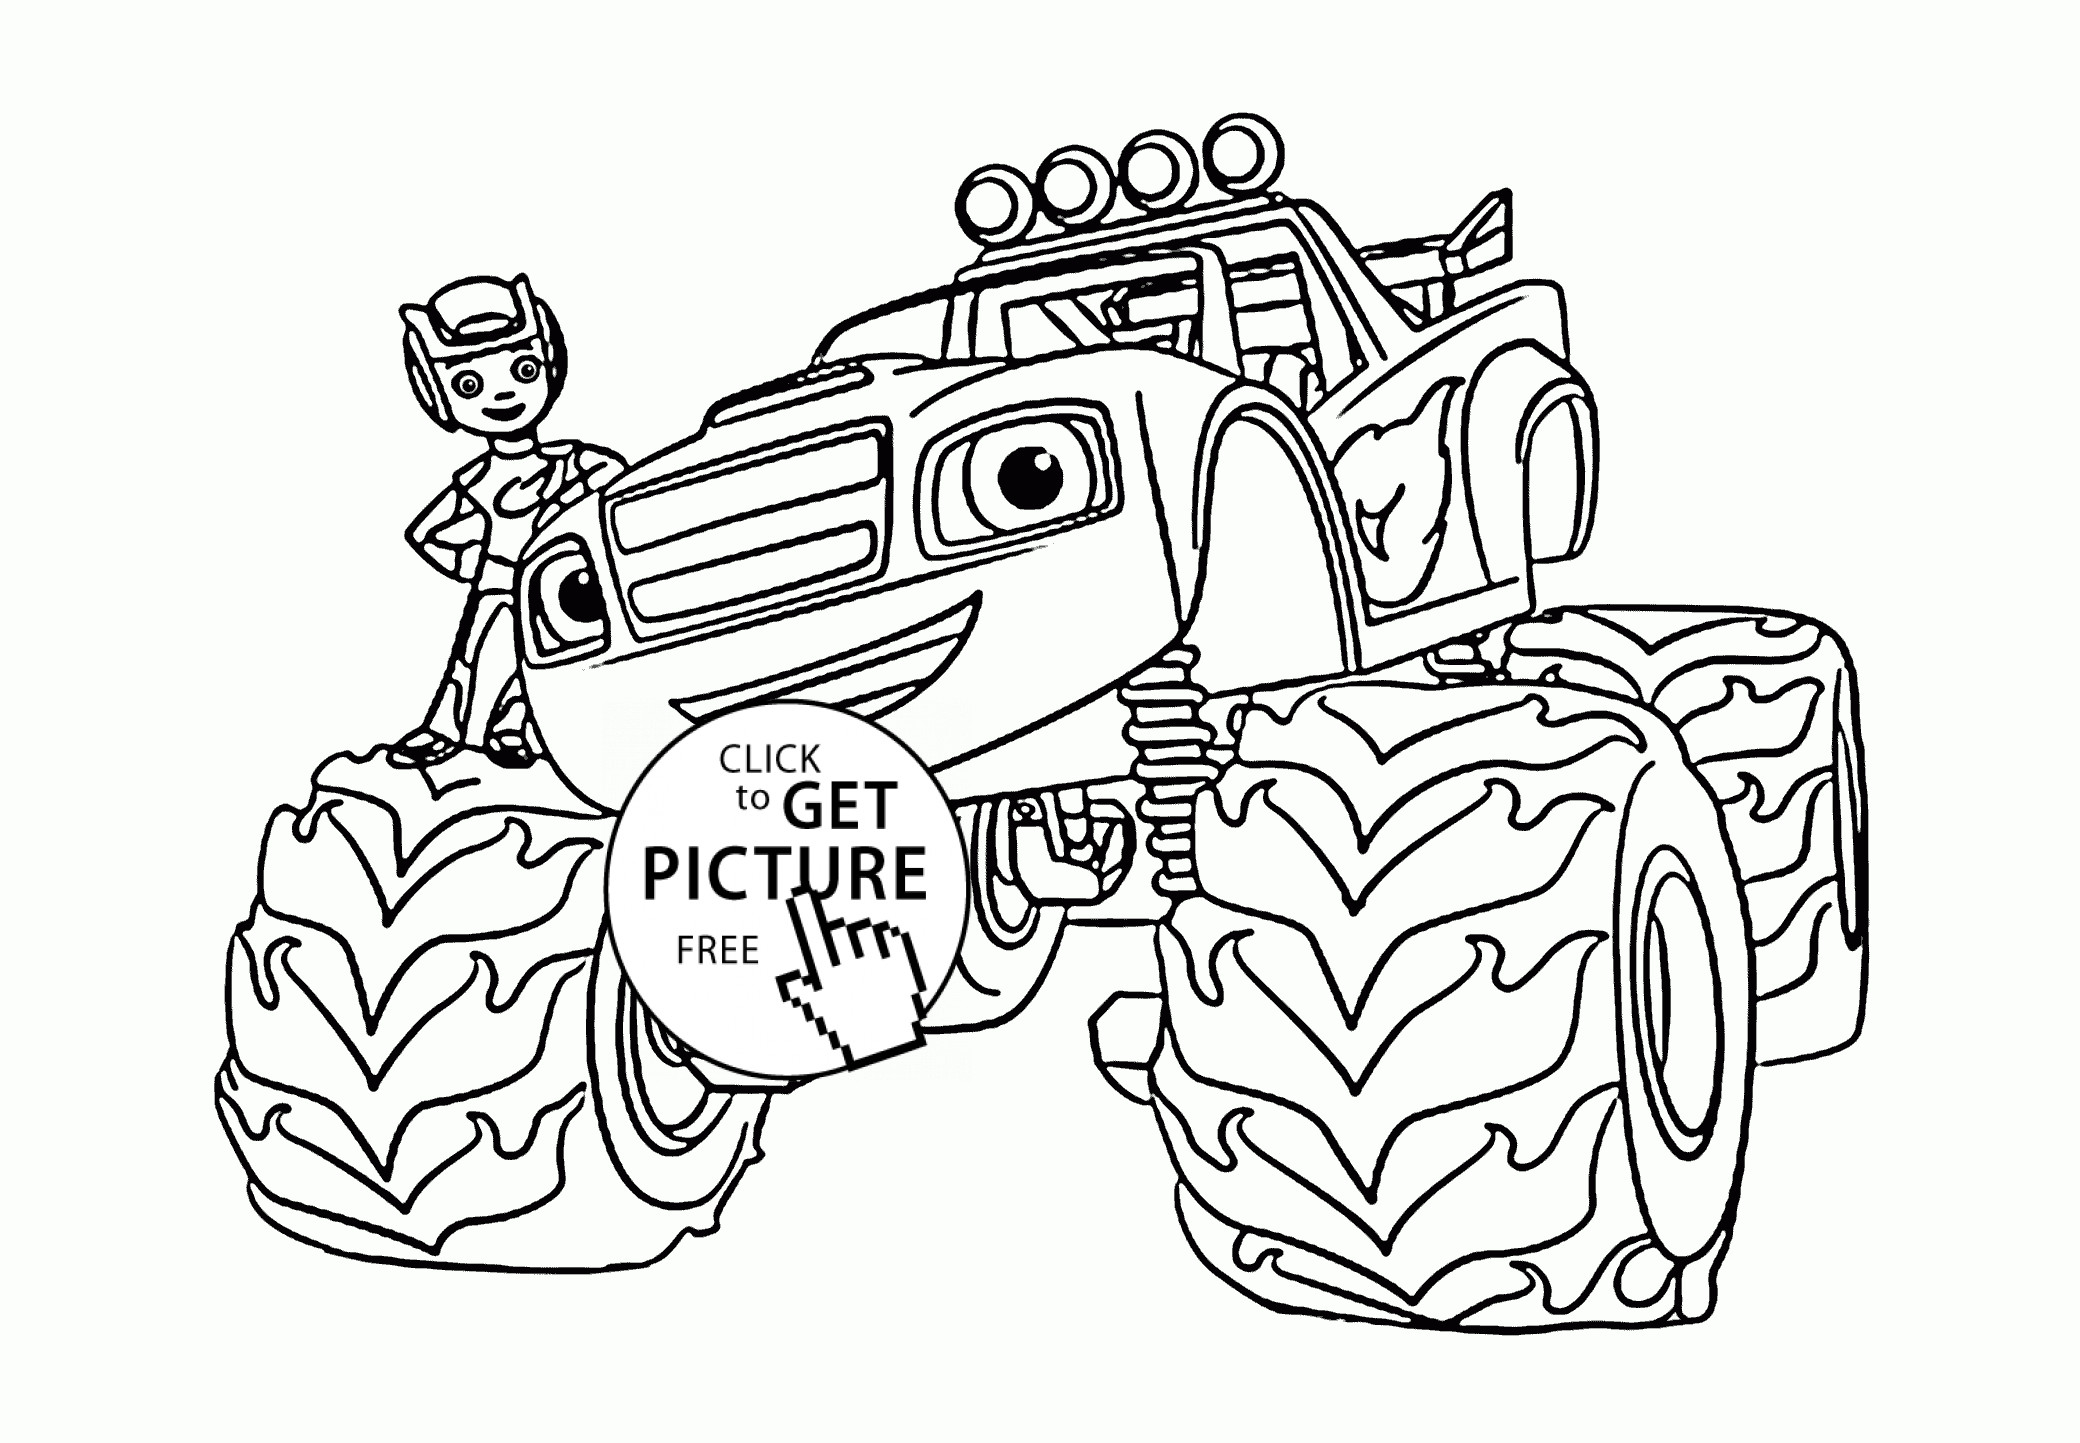 Coloring Sheets For Boys Monster Truck
 Blaze Monster Truck with Boy coloring page for kids